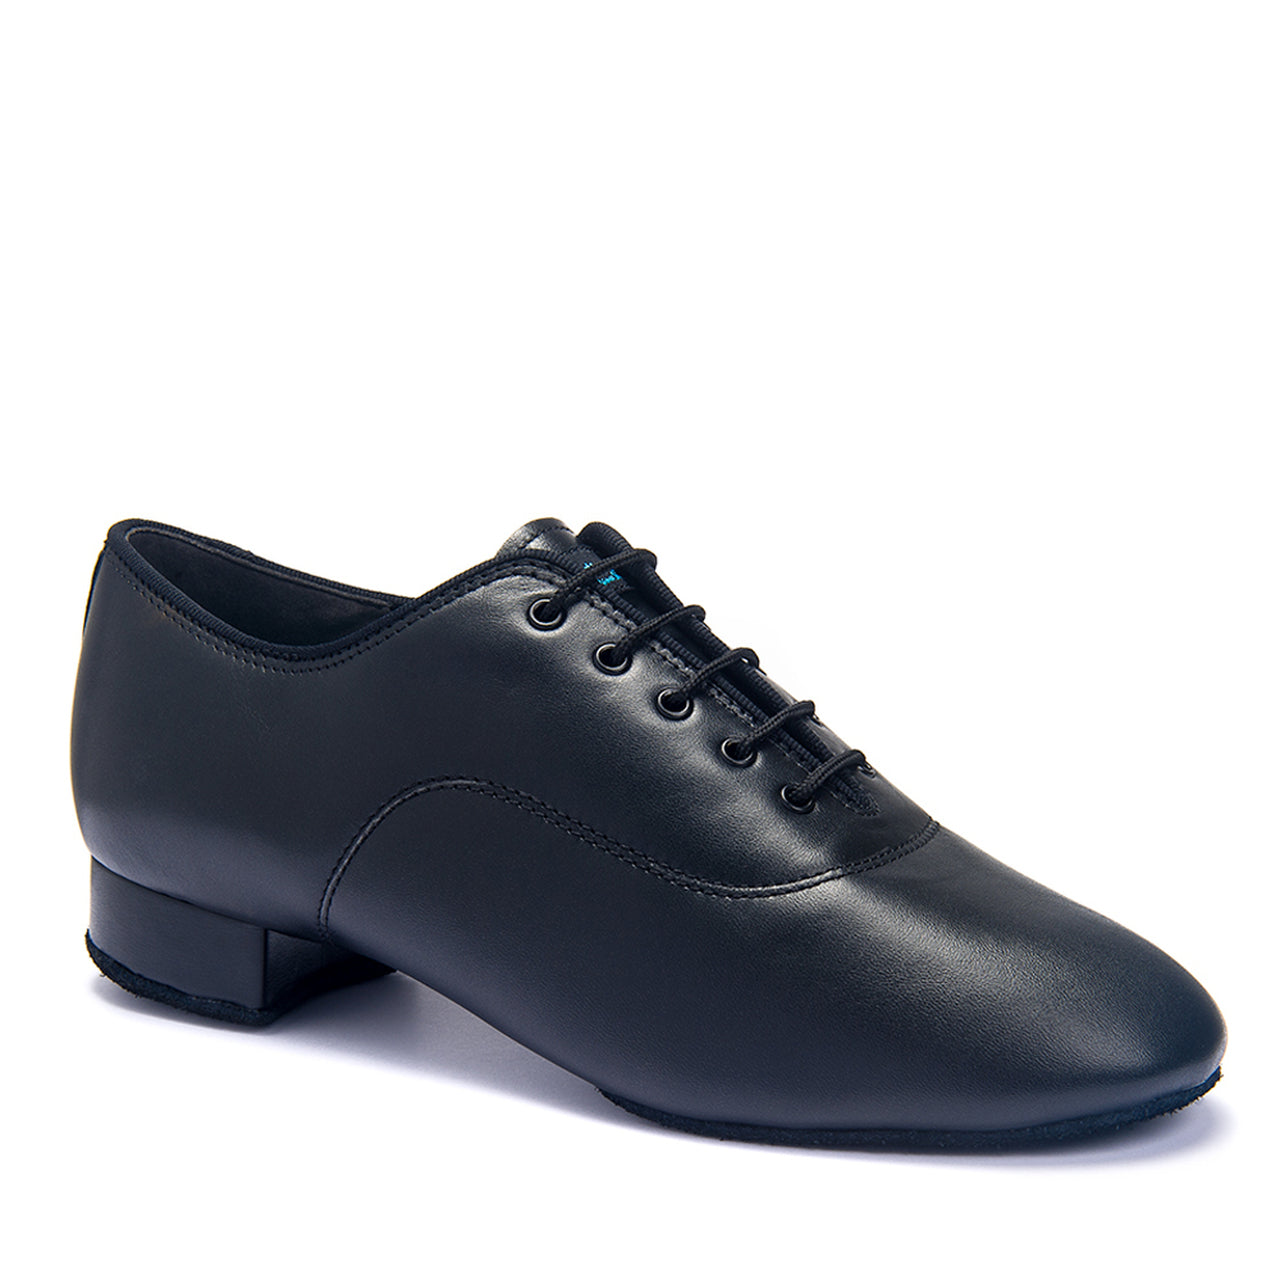 International Dance Shoes IDS Tango Men's Standard Ballroom Shoe Available in Black Calf or Black Patent